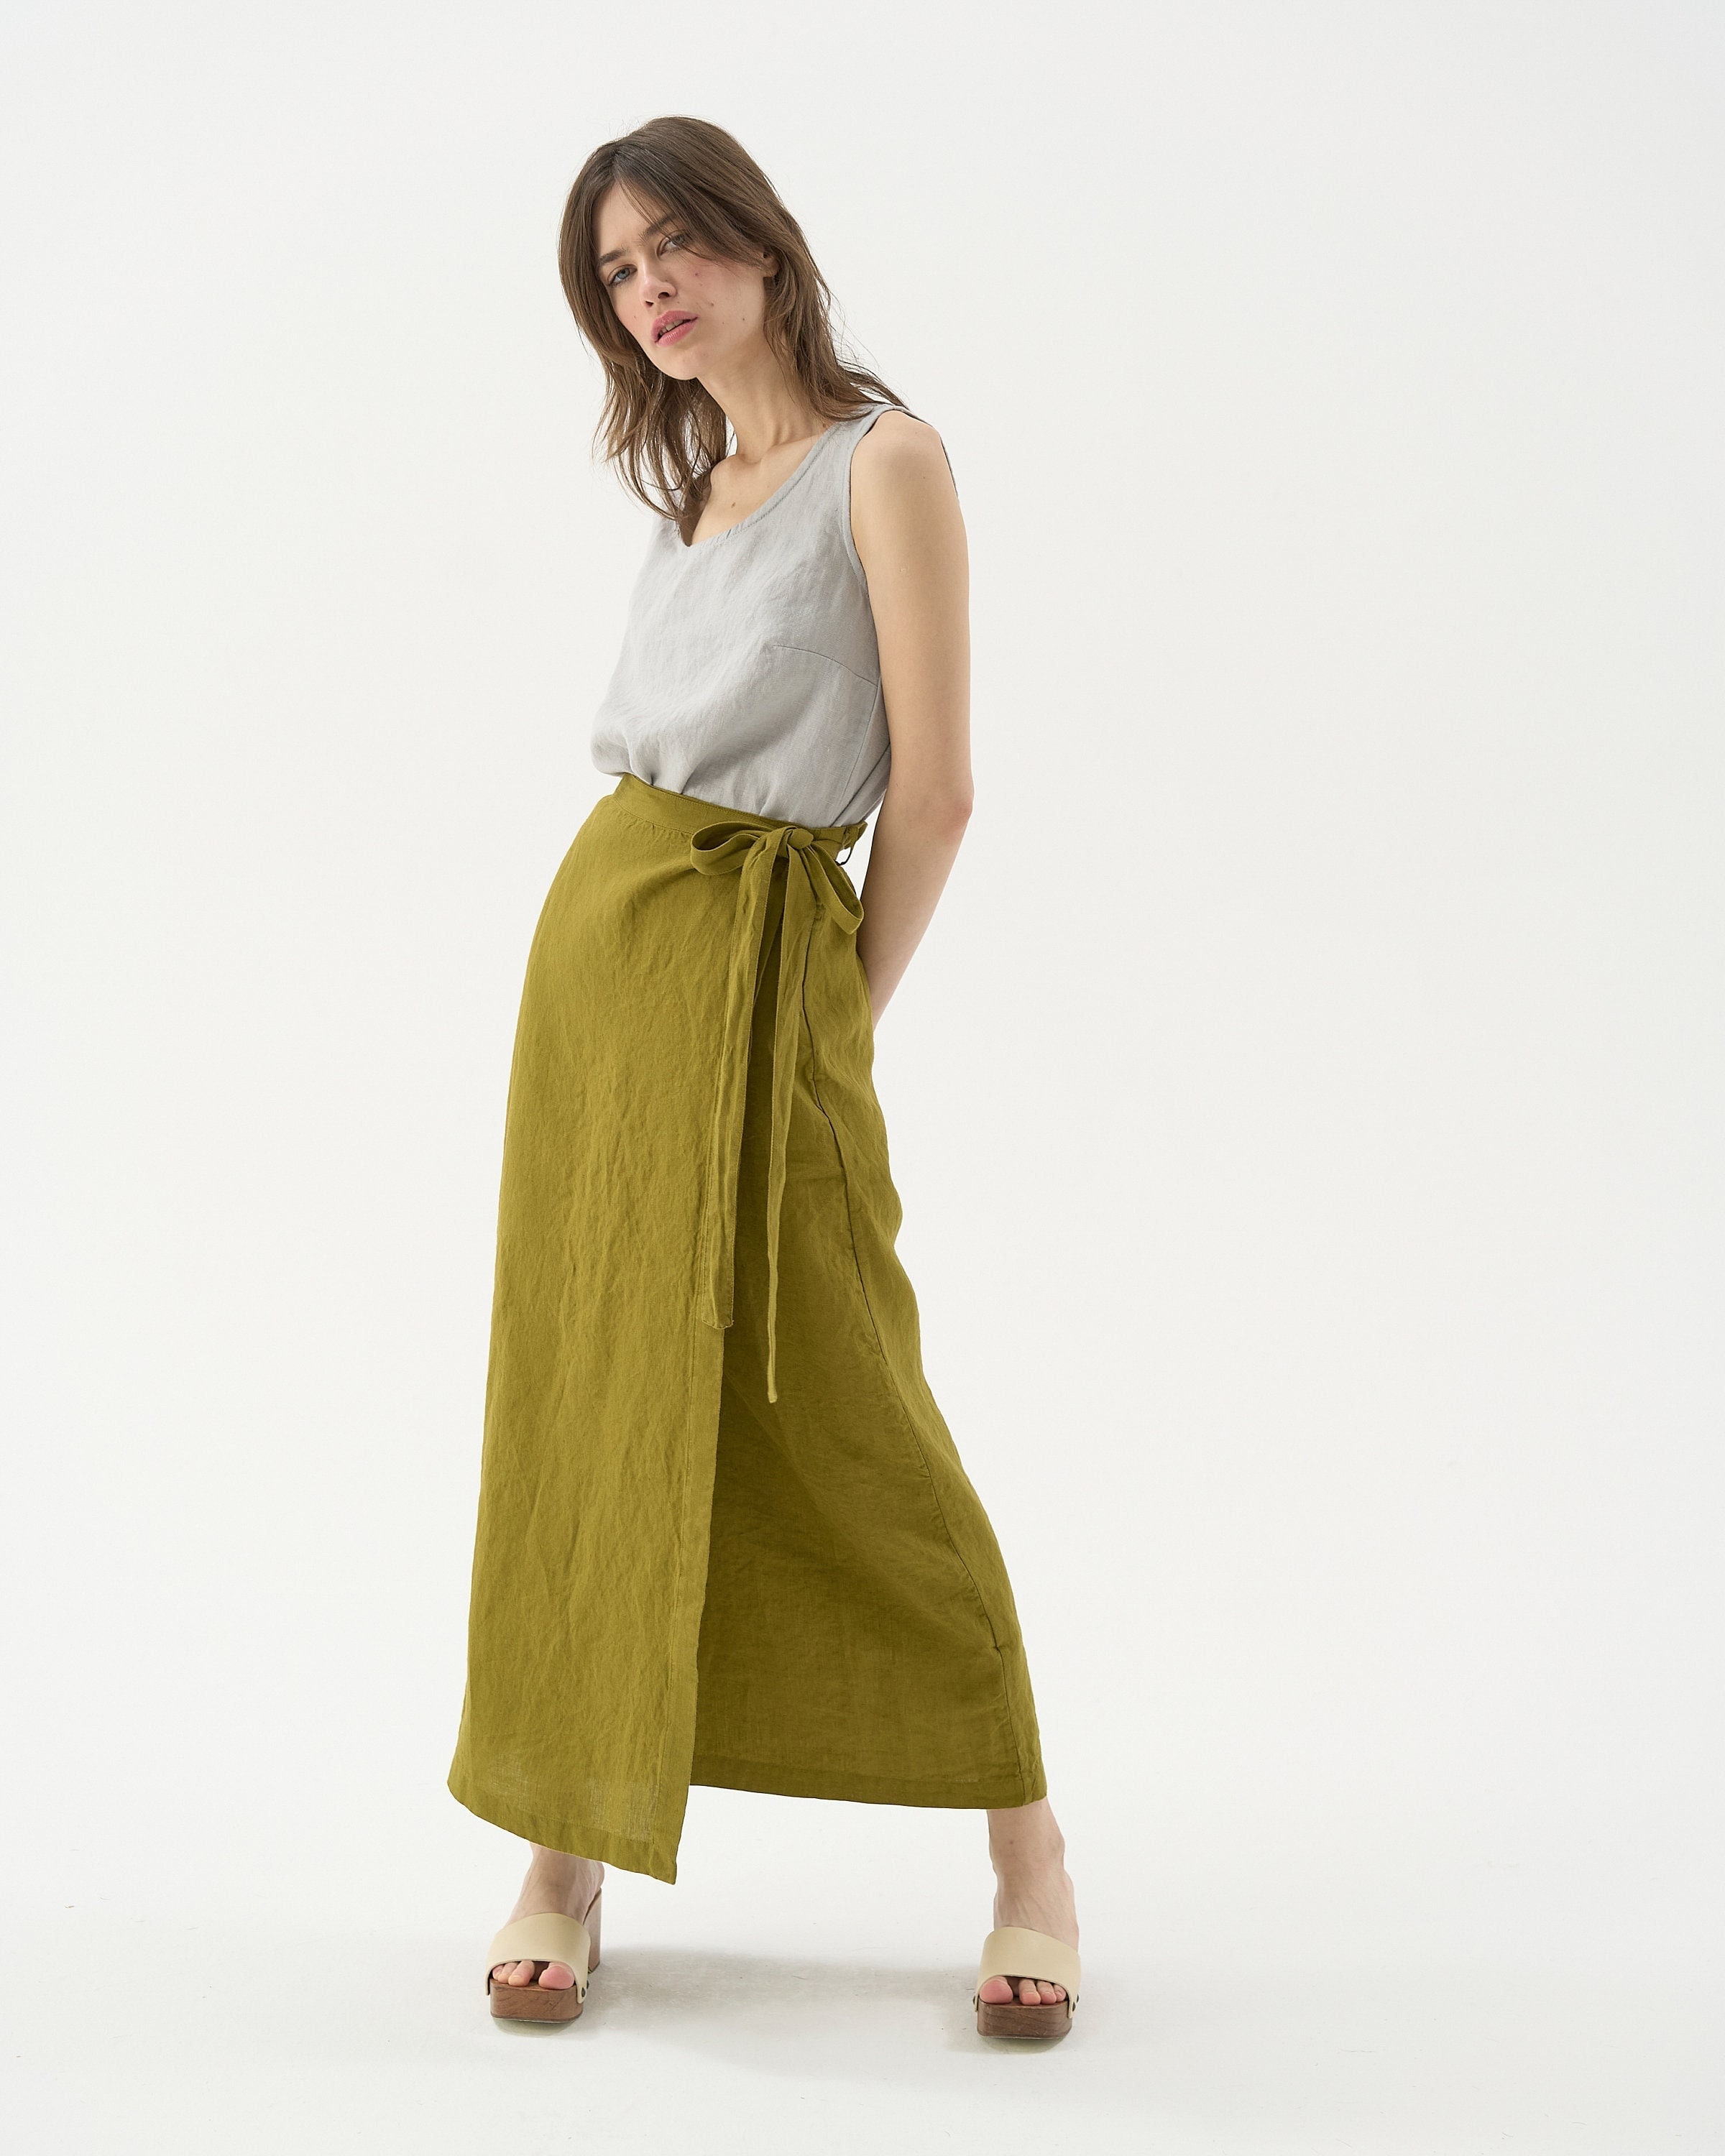 Linen Wrap Skirt FRIDA, Calf Length Linen Skirt, A Line Wrap Skirt,  Charcoal Linen Skirt, Long Linen Skirt for Woman -  Canada